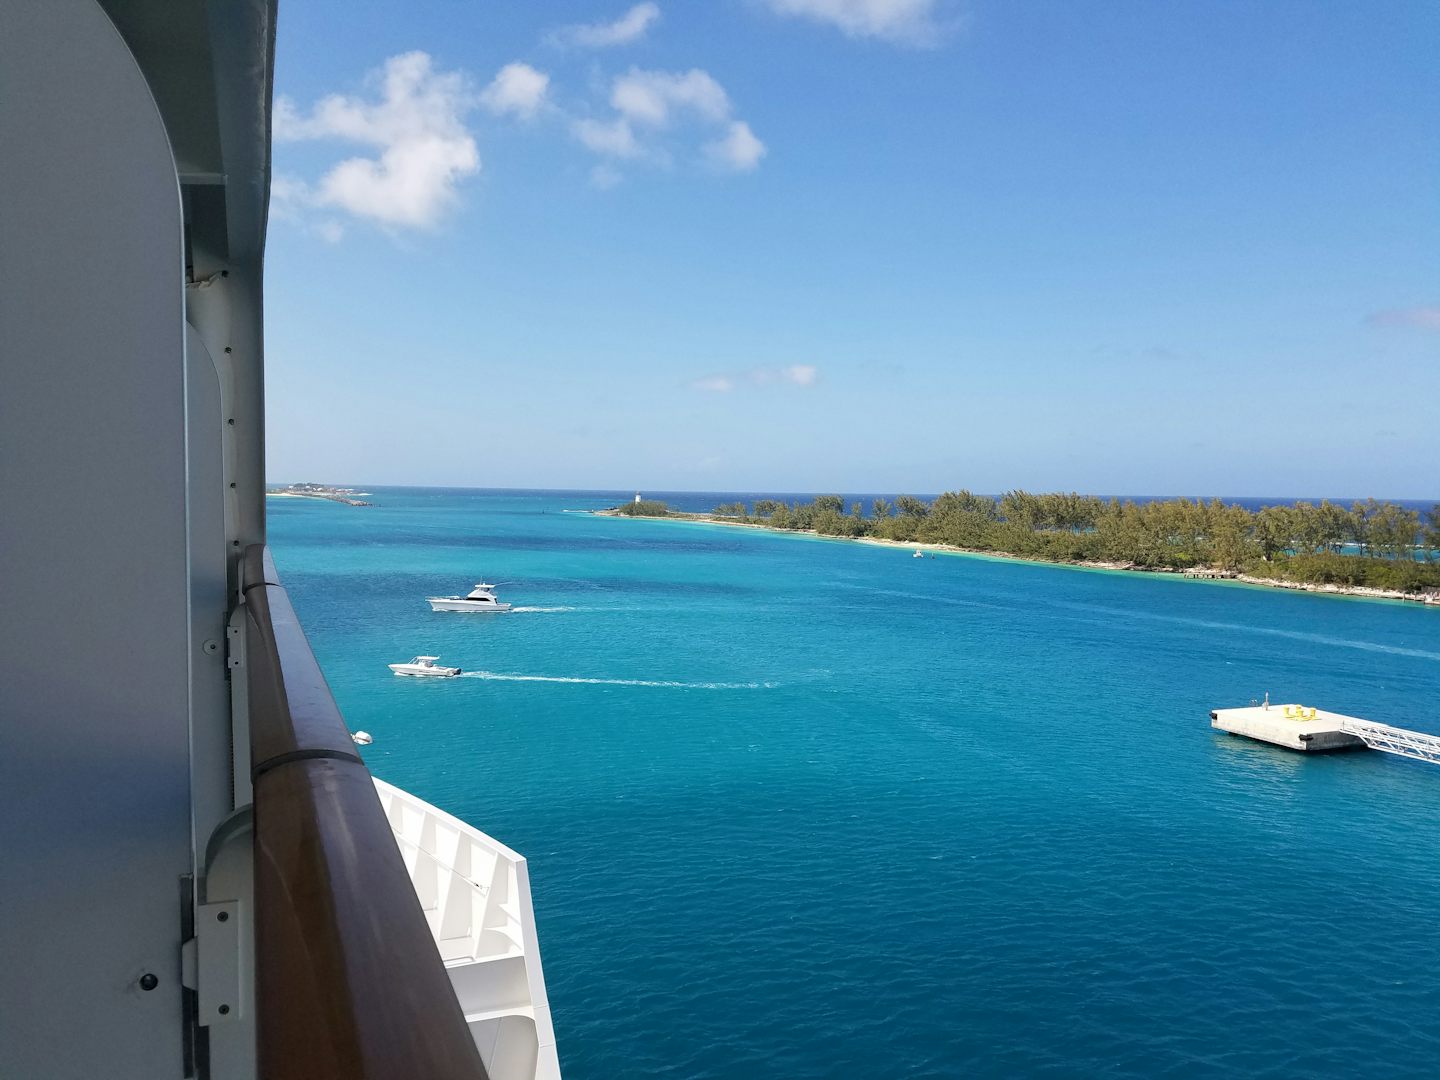 Docking in the Bahamas